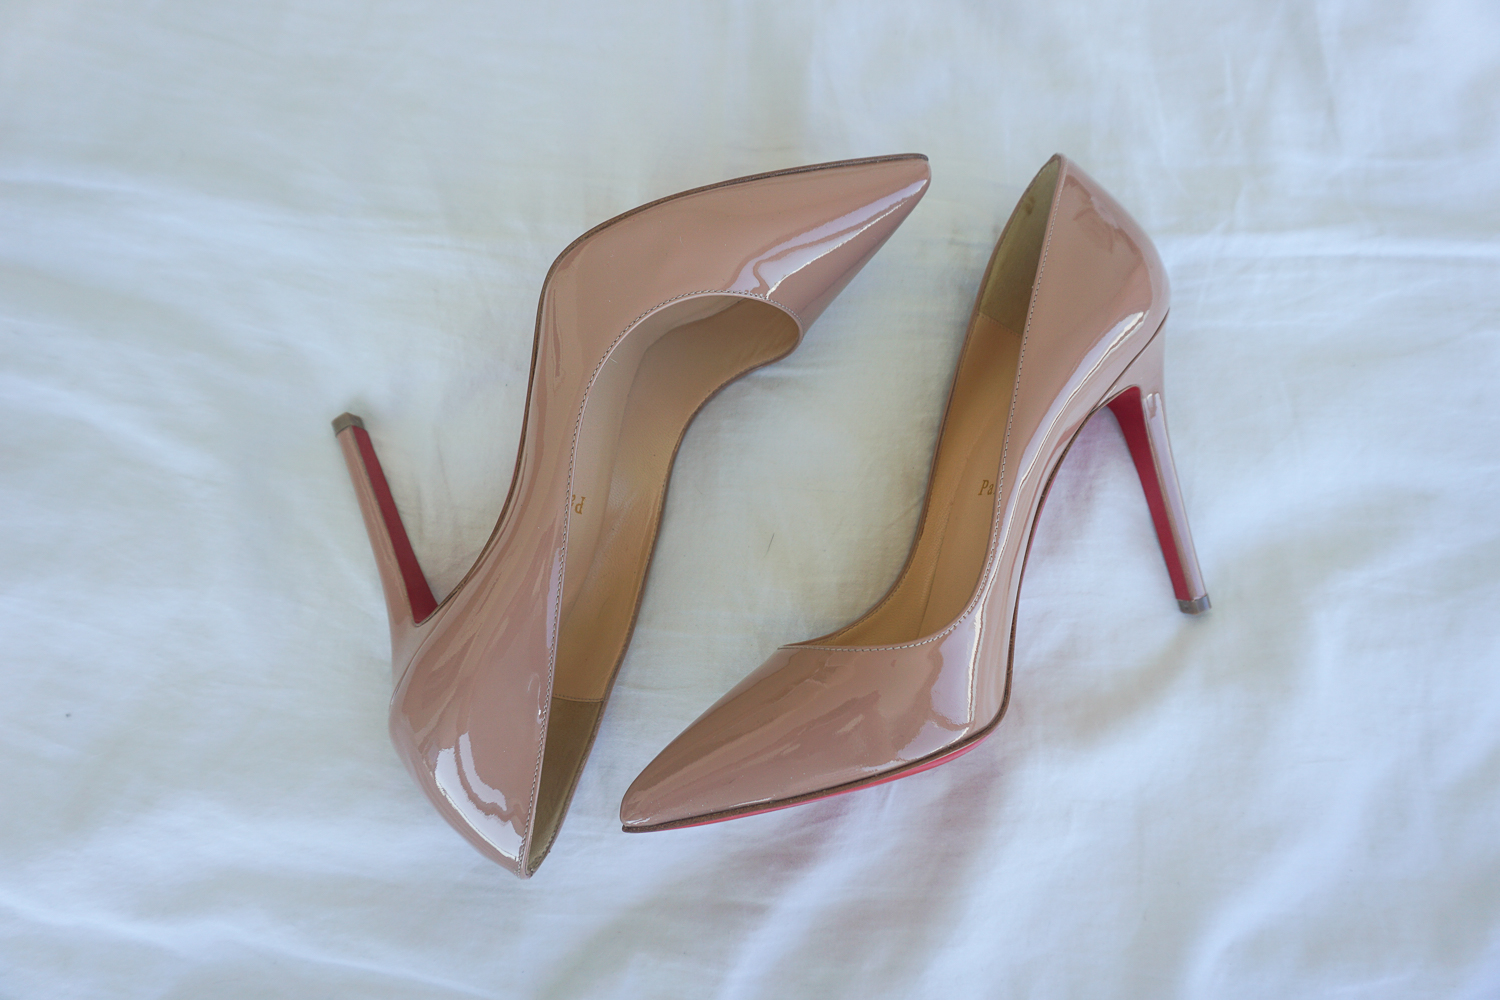 Chose Louboutin heels for tonight : r/heels